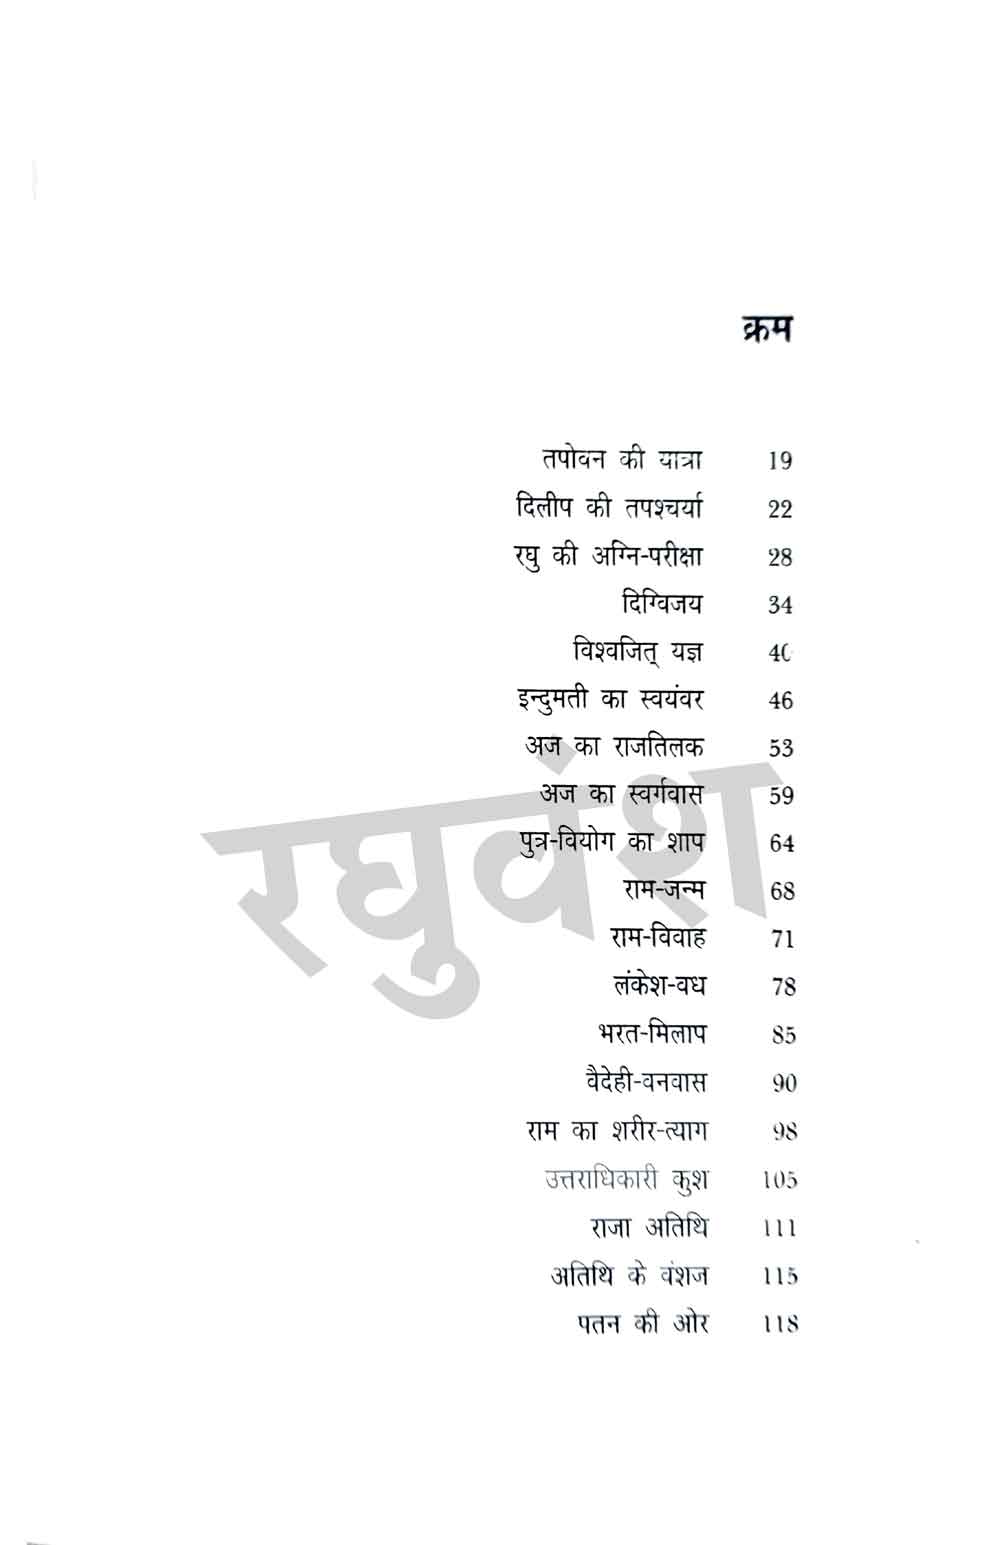 Mahakavi Kalidas - Combo set (Hindi)